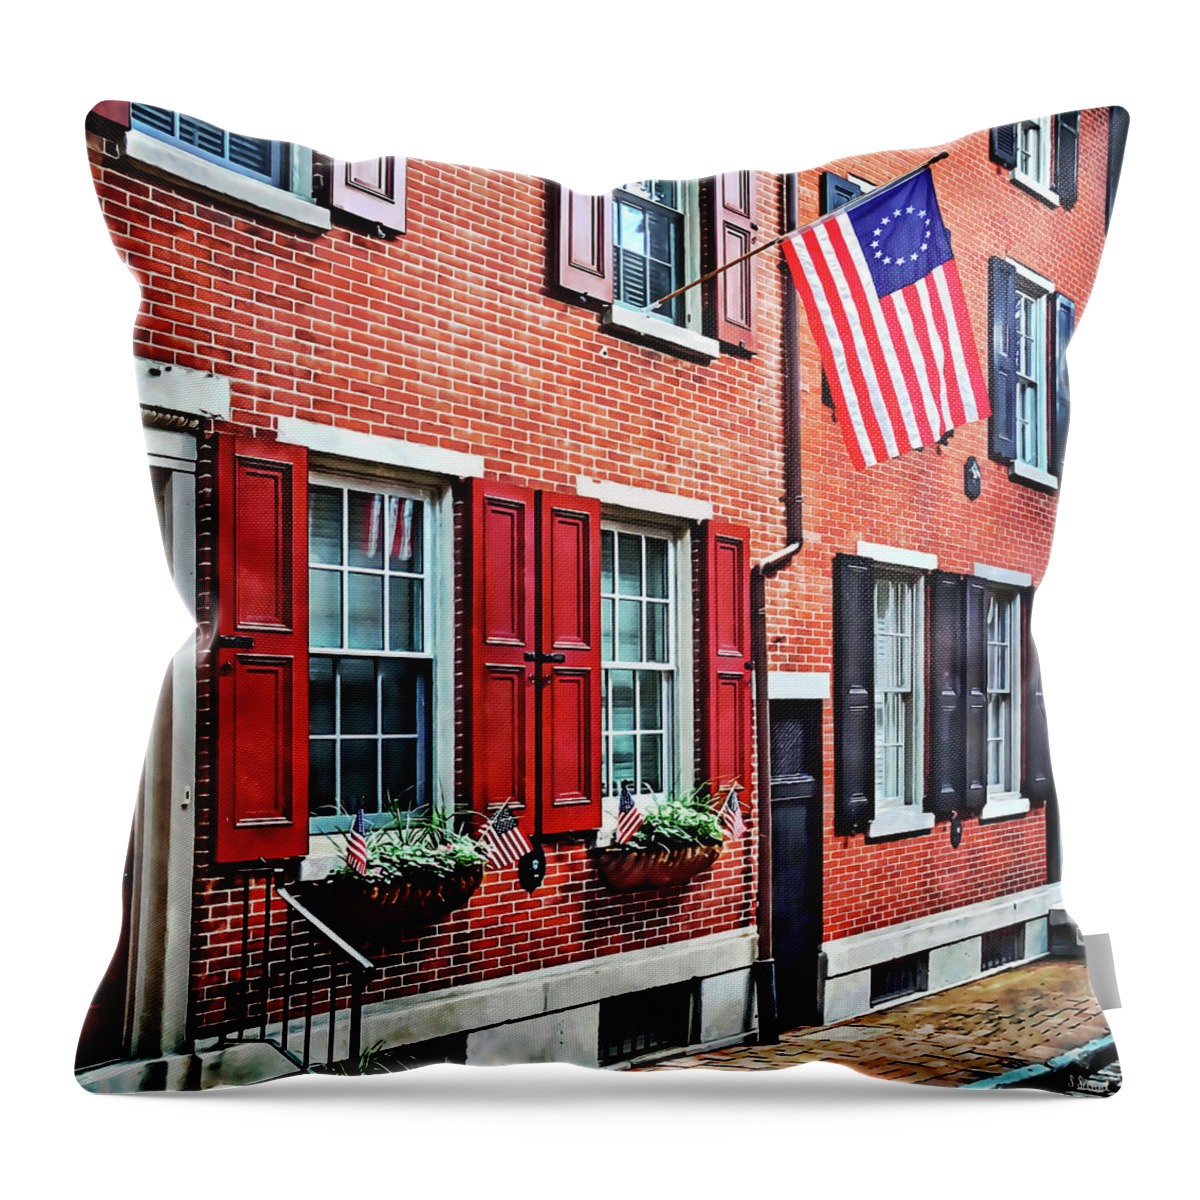 Philadelphia Throw Pillow featuring the photograph Philadelphia PA - S American Street by Susan Savad